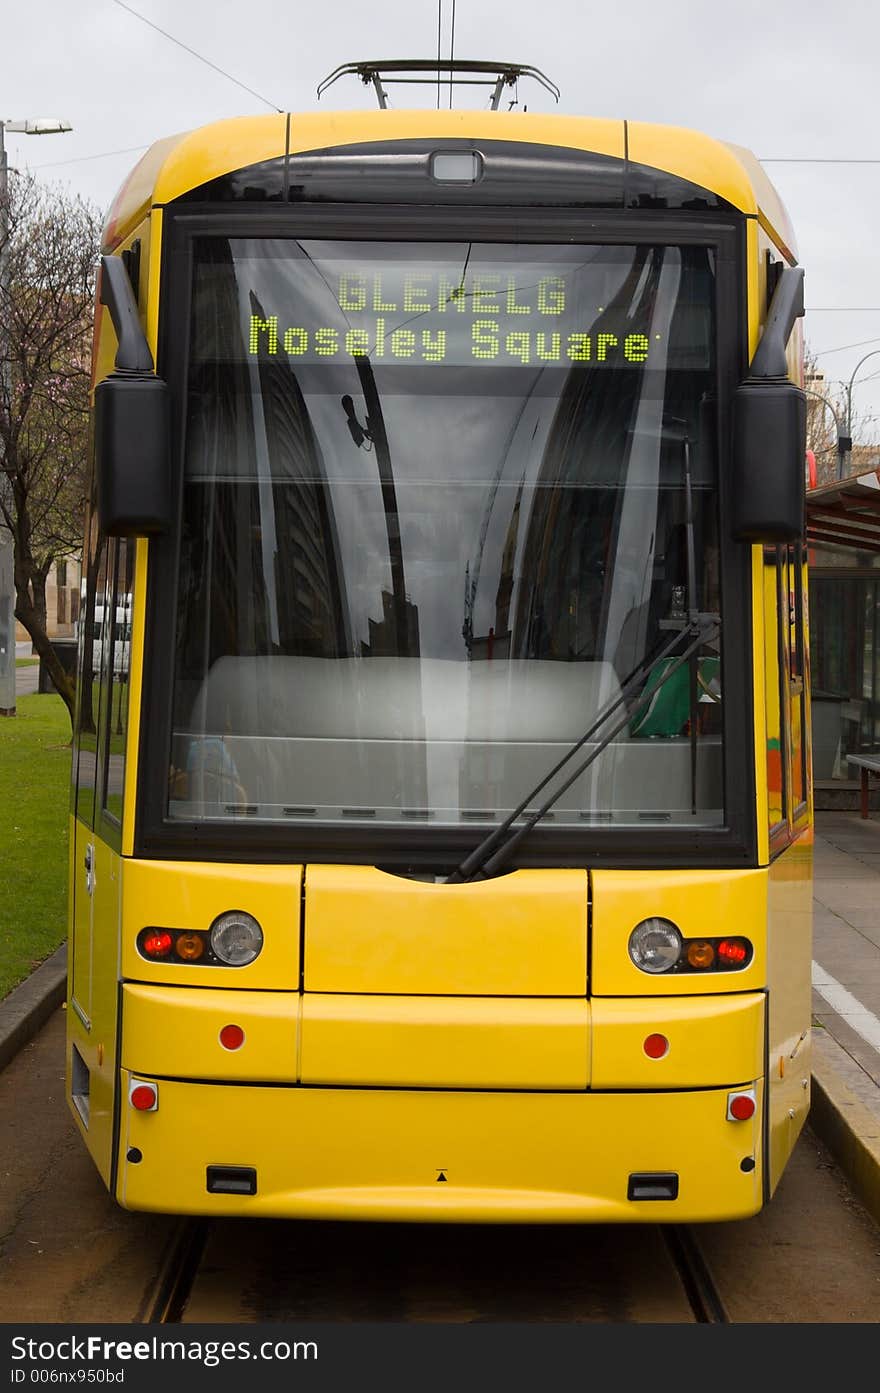 A Bombardier Flexity Class tram in Adelaide, South Australia. A Bombardier Flexity Class tram in Adelaide, South Australia.